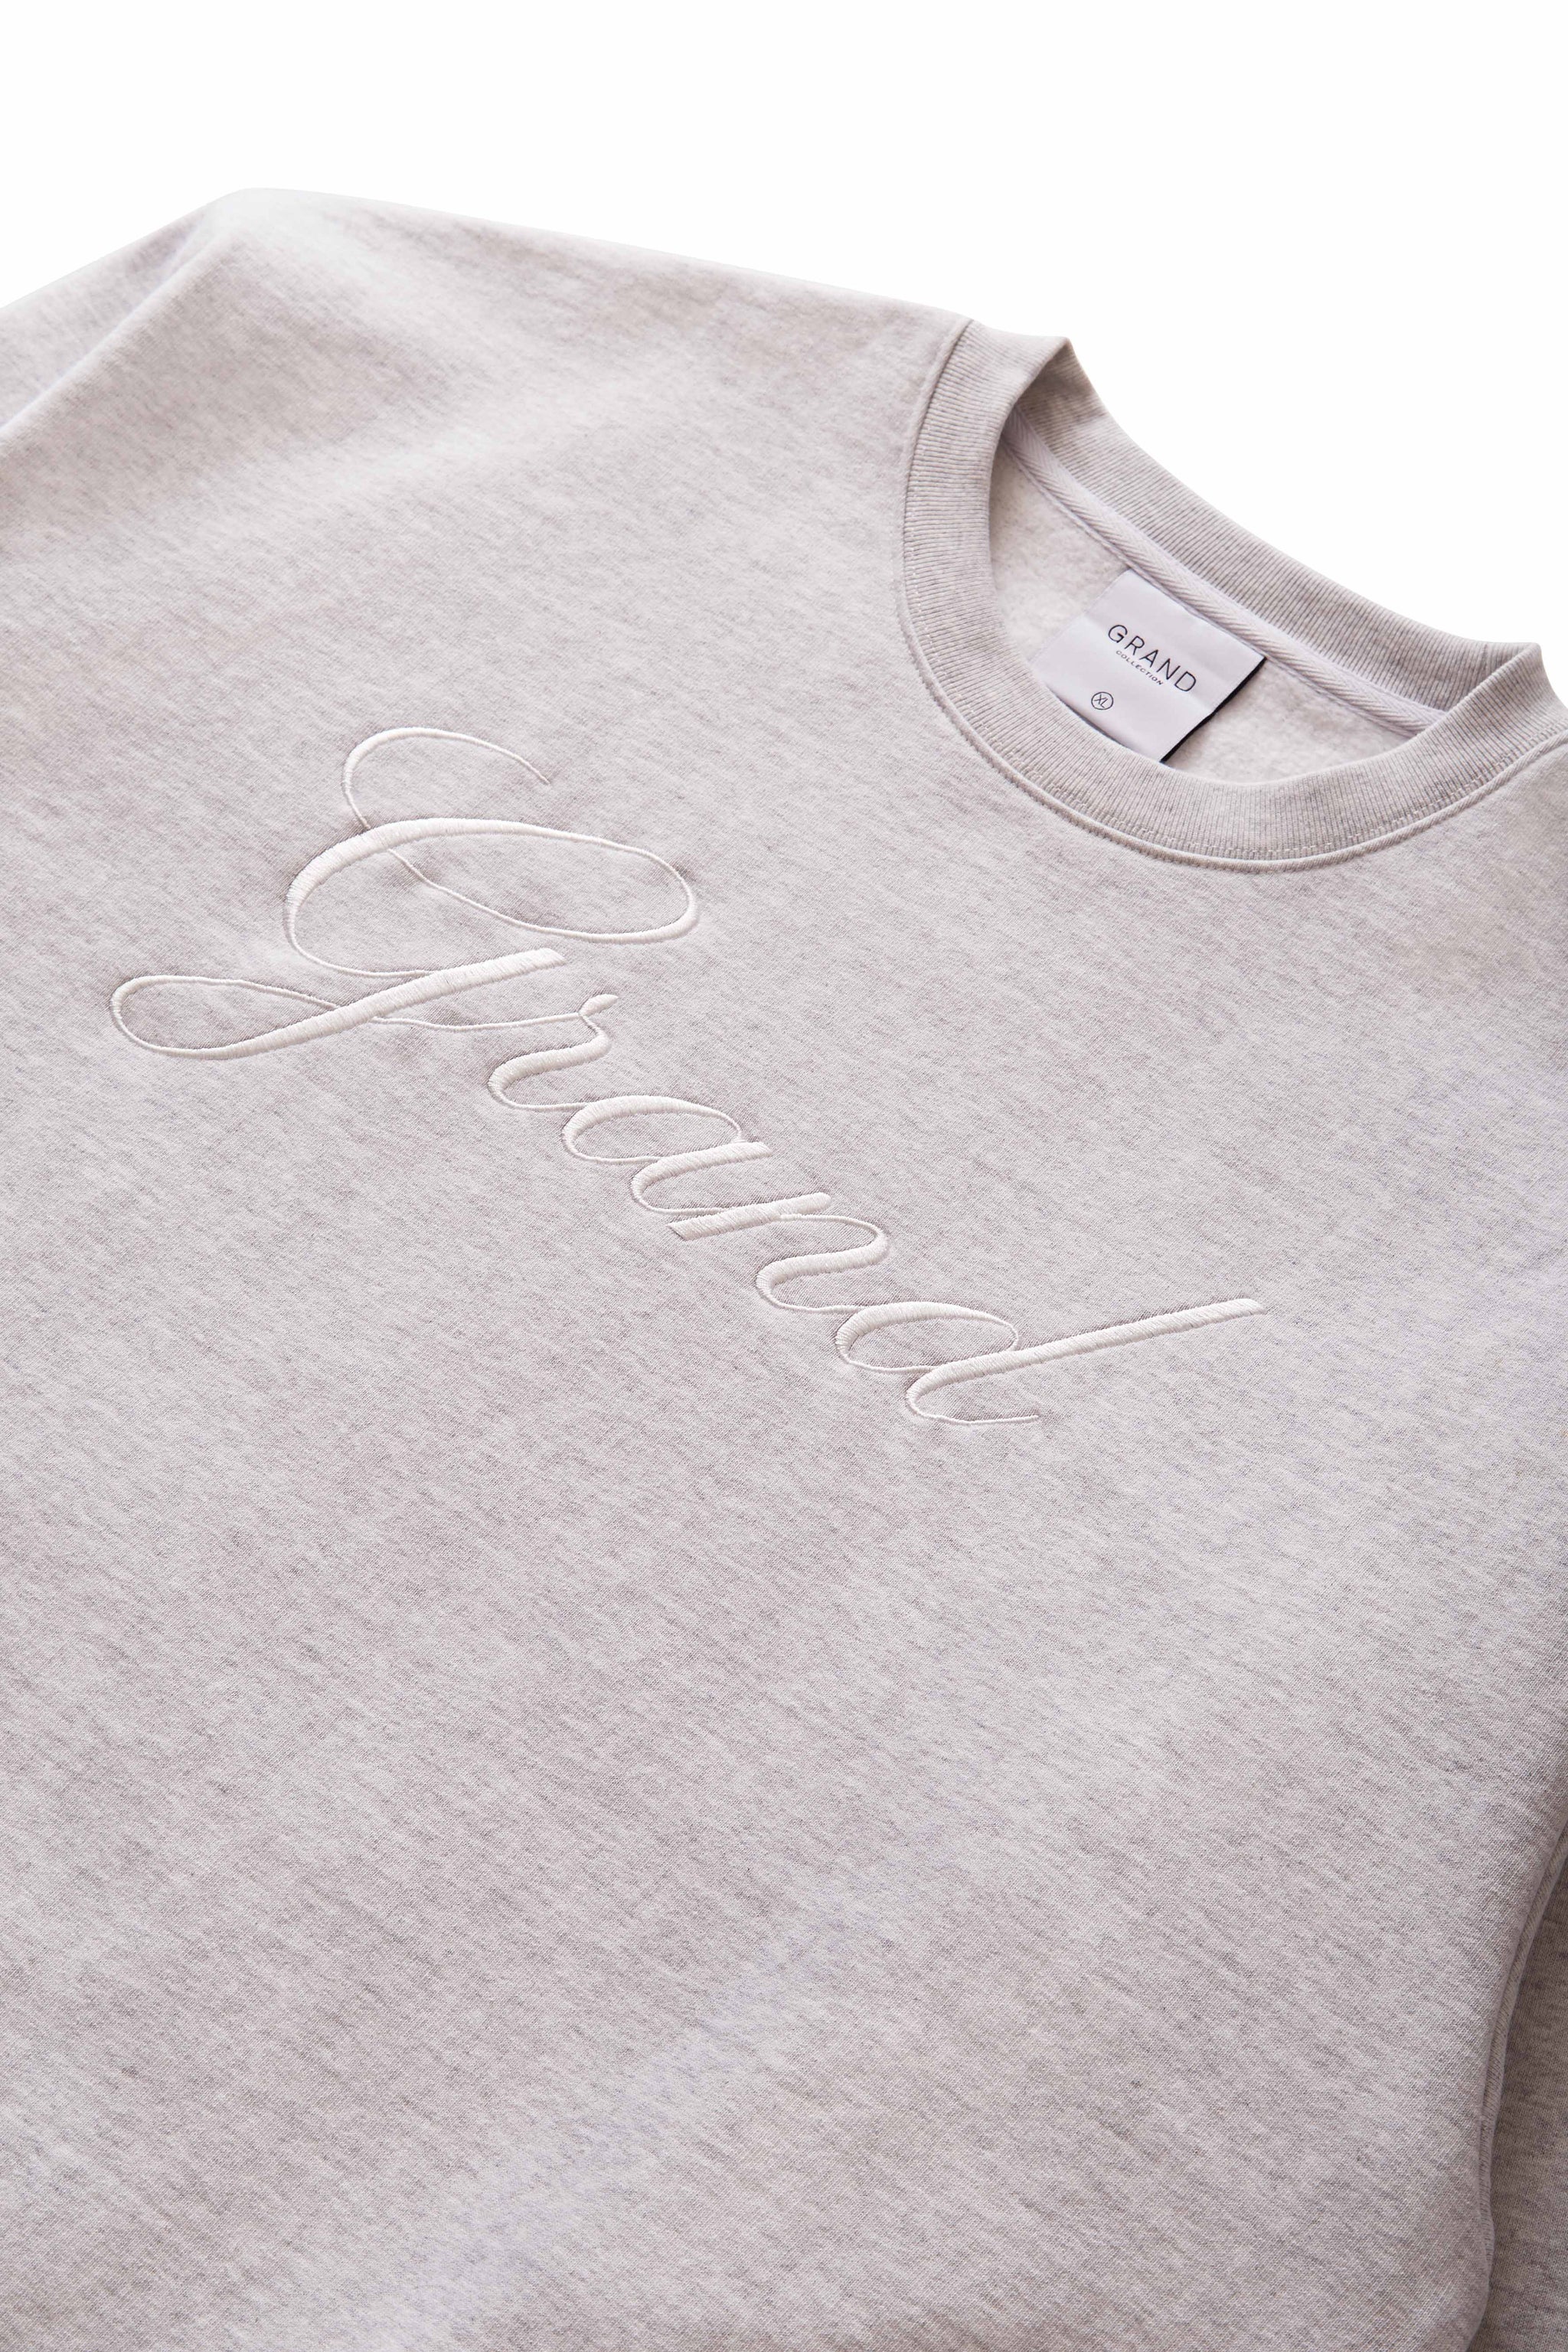 GRAND COLLECTION - Embroidered CrewNeck Sweatshirt  "Ash Grey"